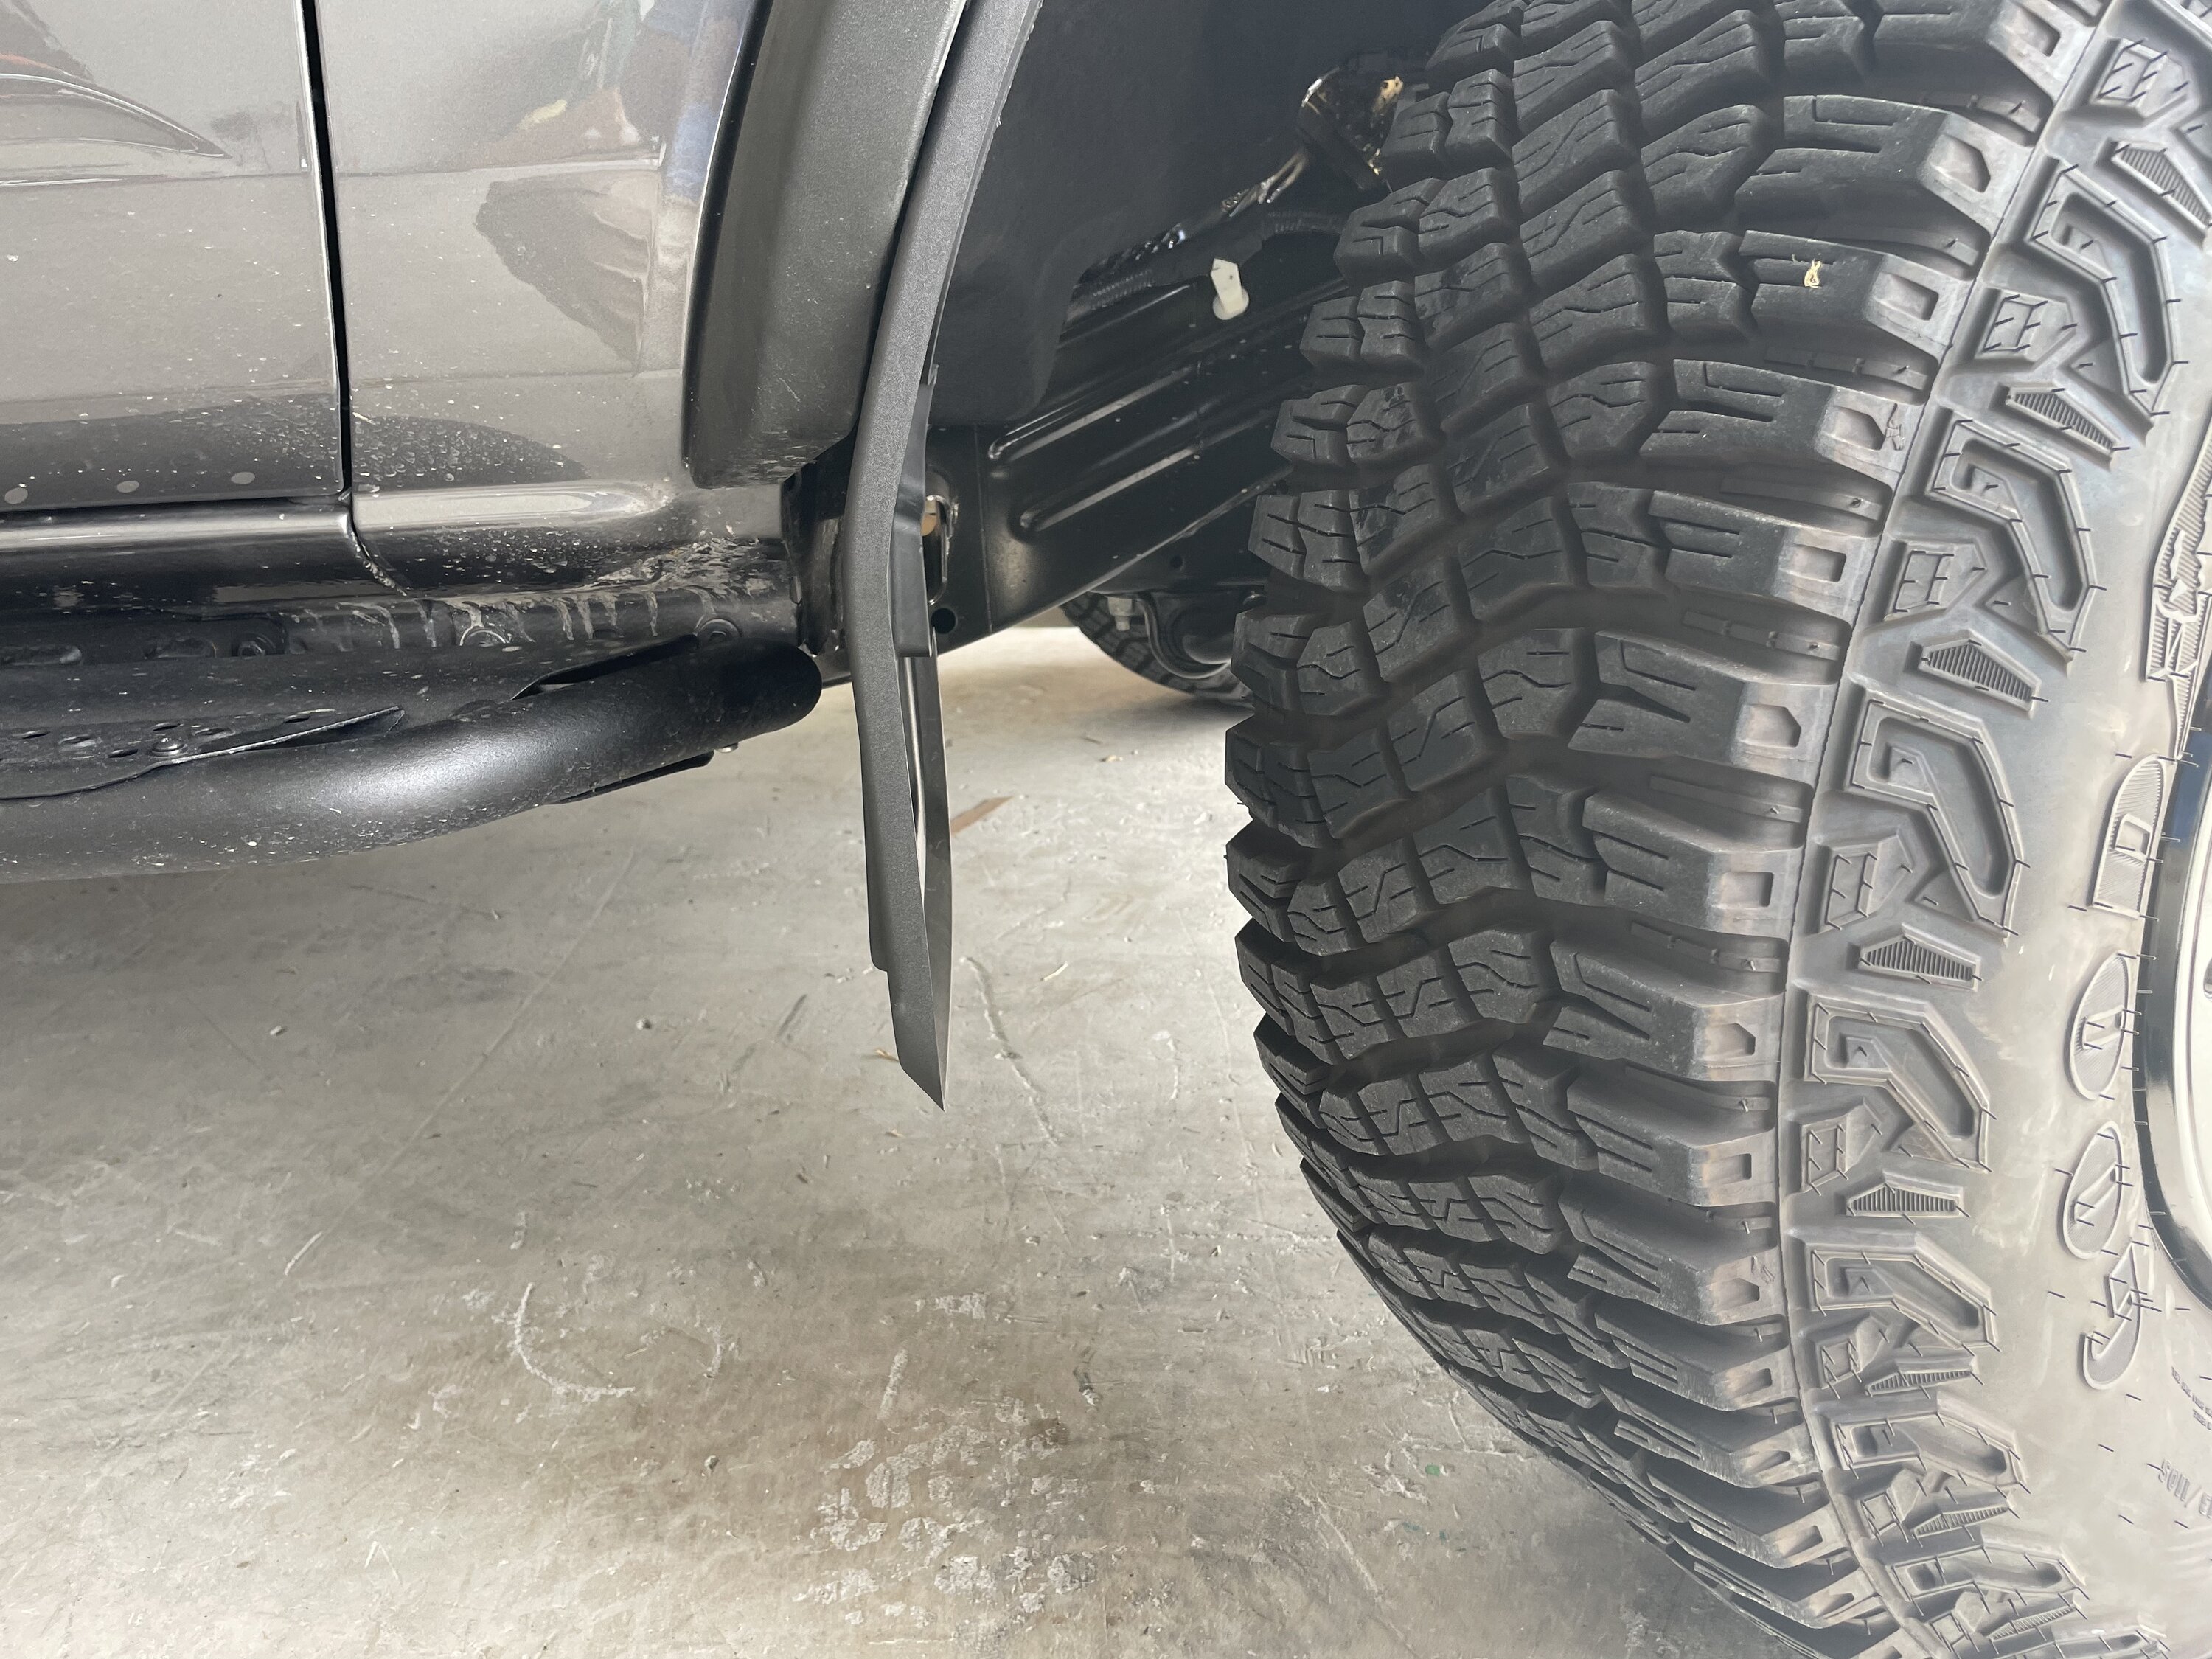 Ford Bronco Mabett Mud Flaps Fits Sasquatch set that accommodates factory rock rails or tube steps D3A0C732-58FB-4F5D-ABC6-86A7AAE69533